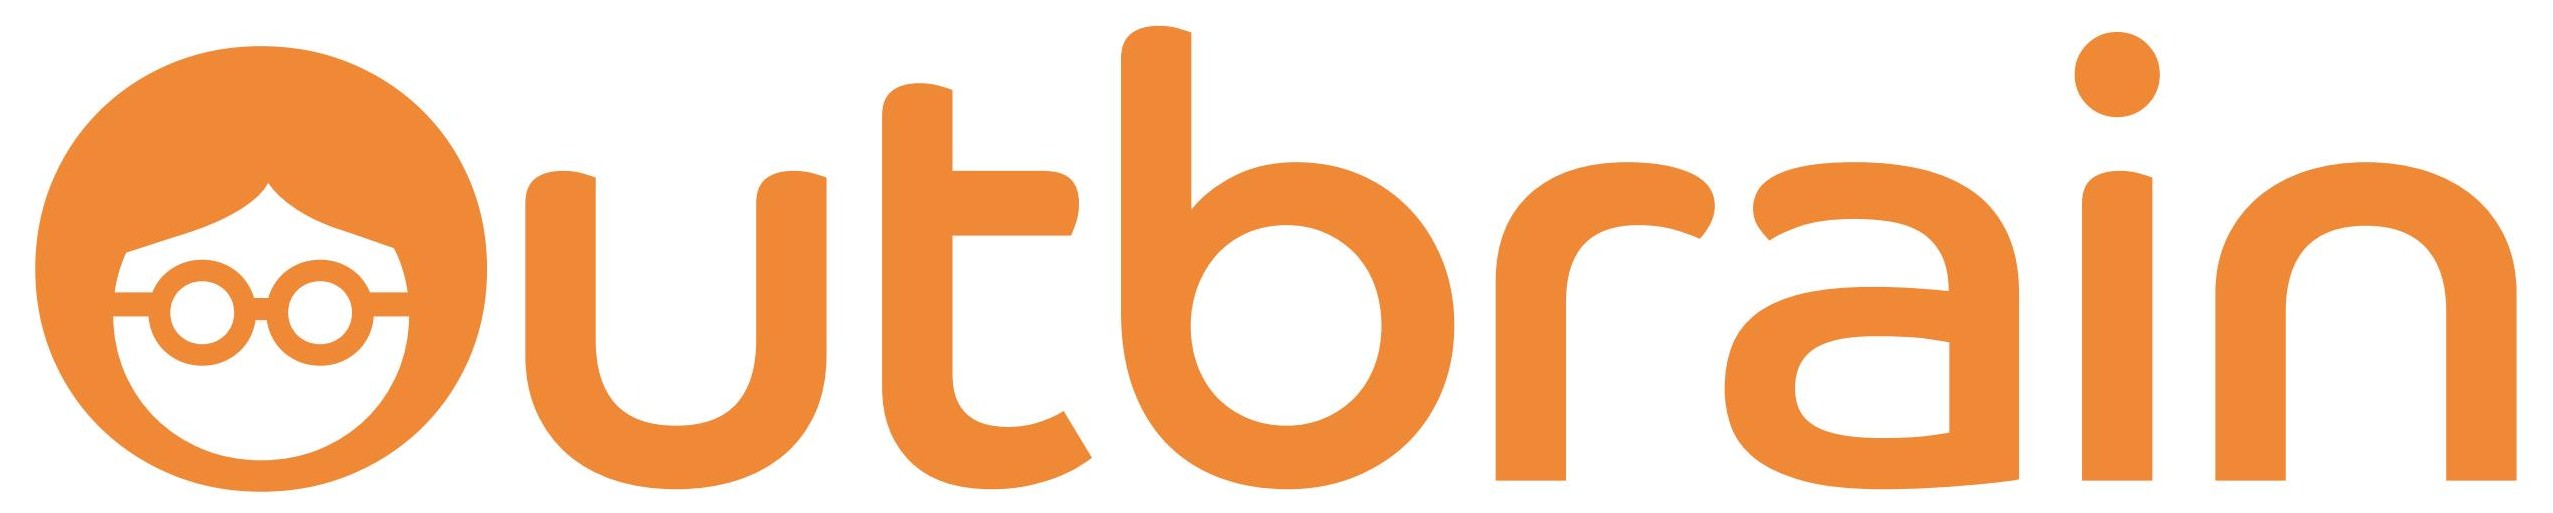 outbrain logo 08